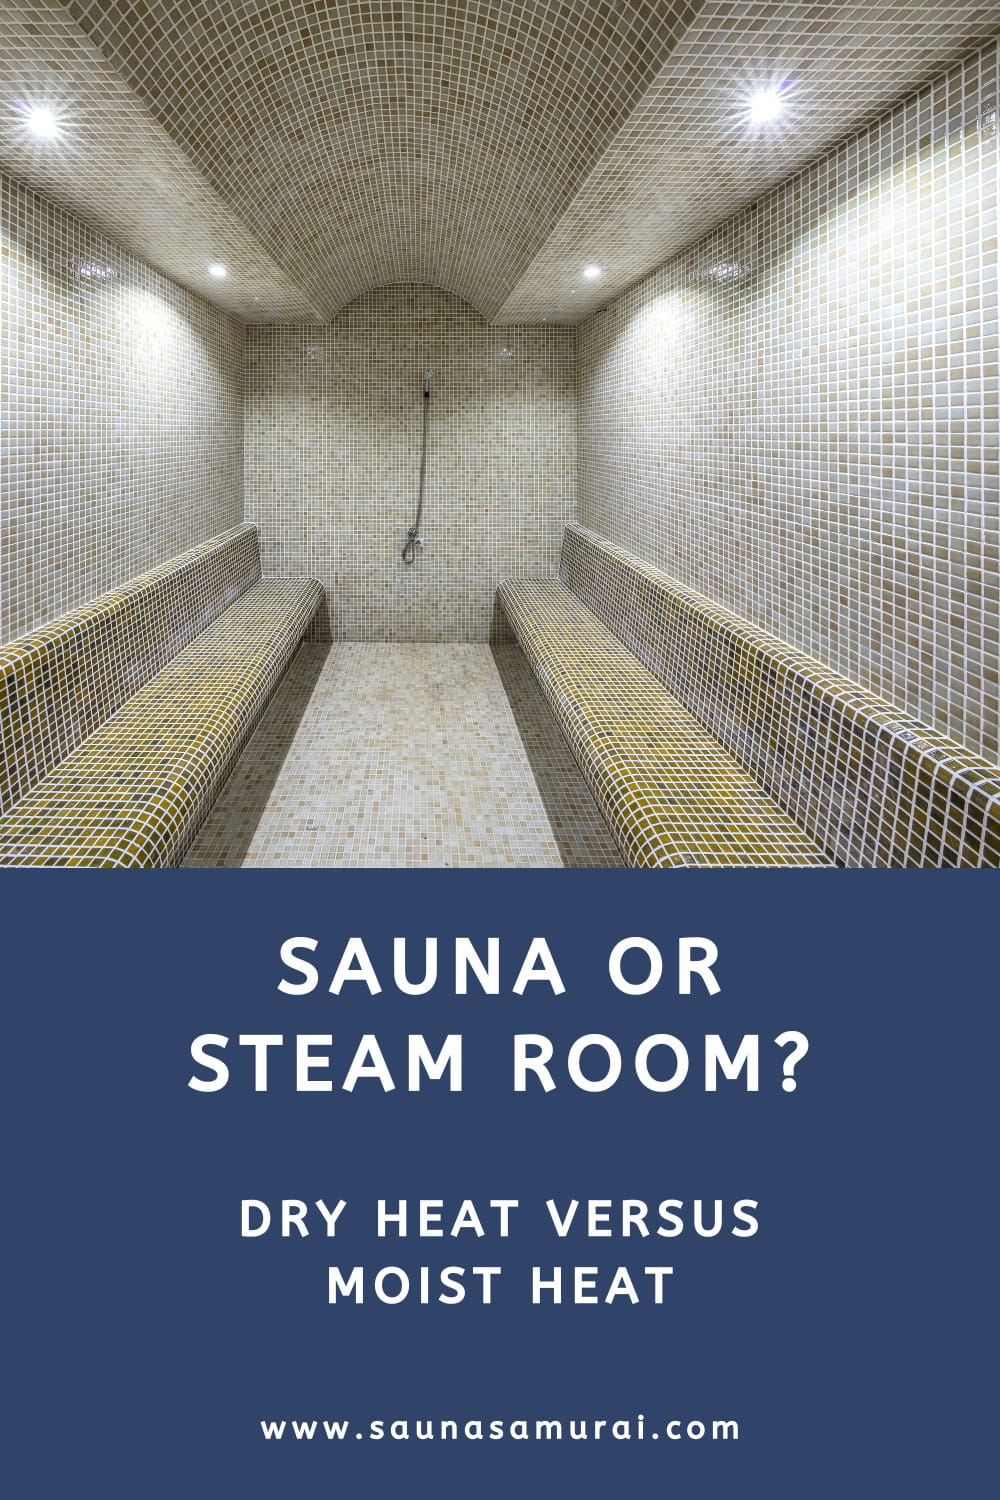 Sauna or steam room (dry heat versus moist heat)